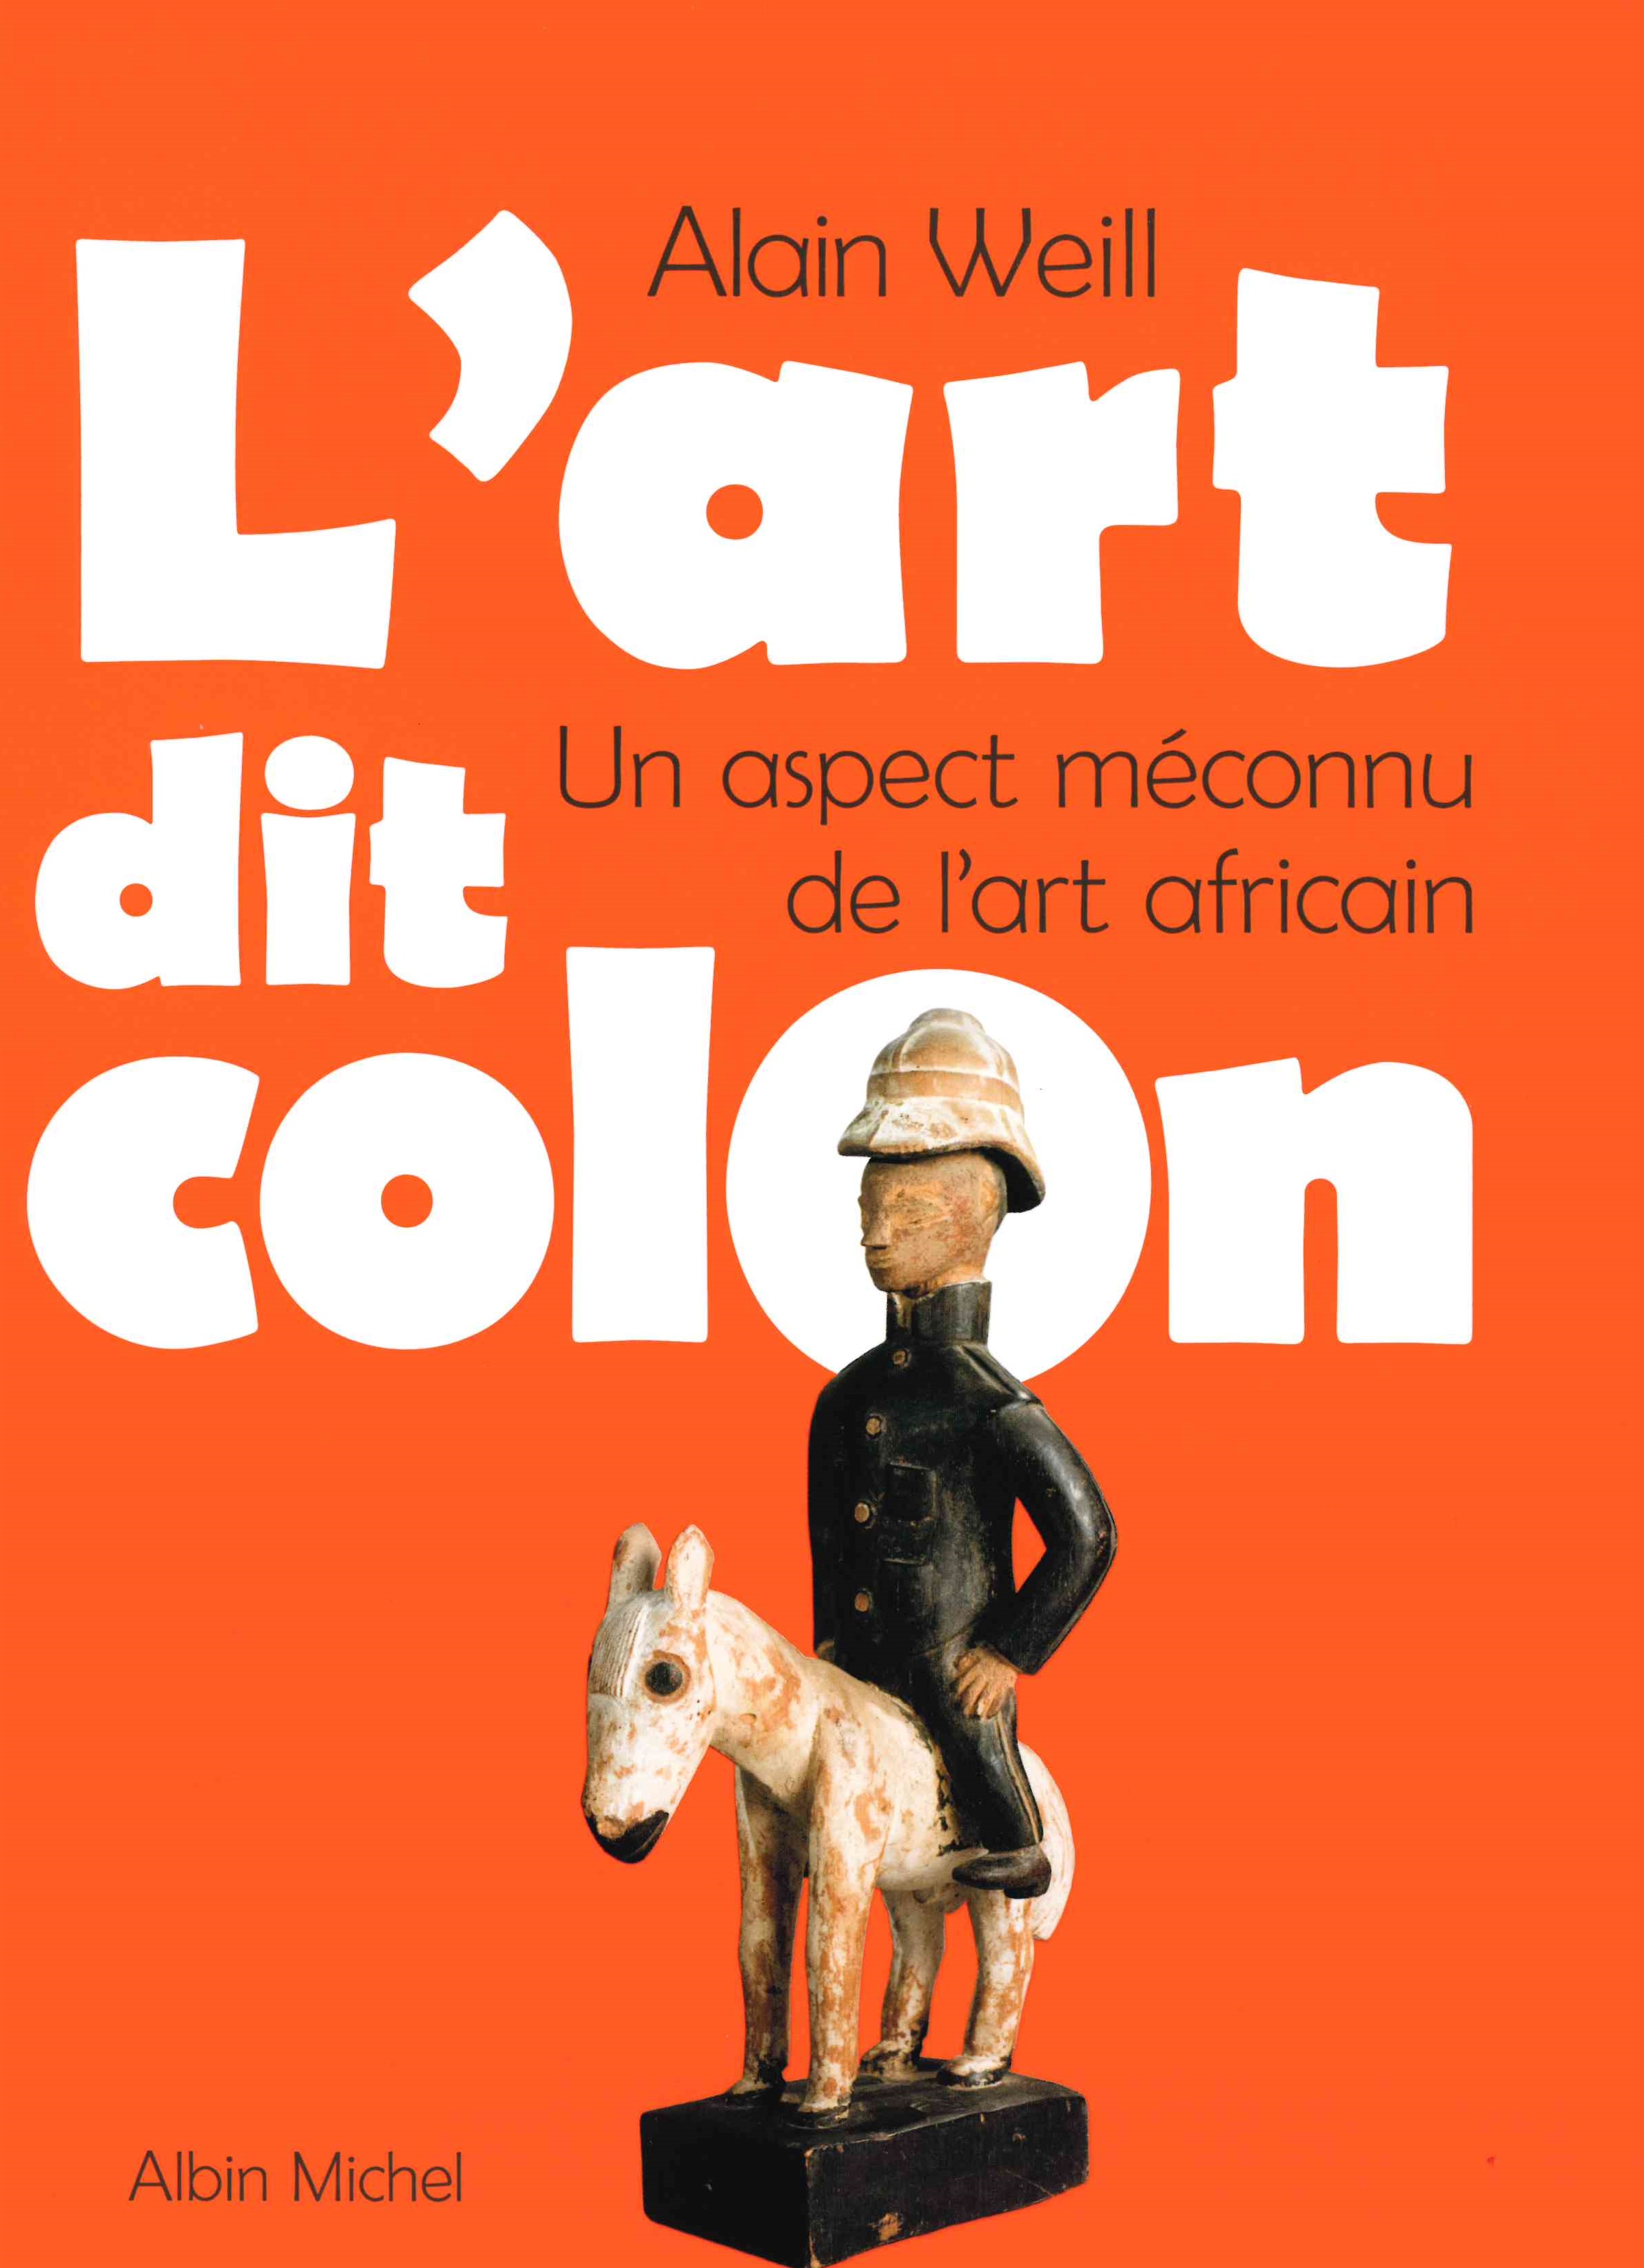 Weill (Alain), L’art dit colon : un aspect méconnu de l’art africain